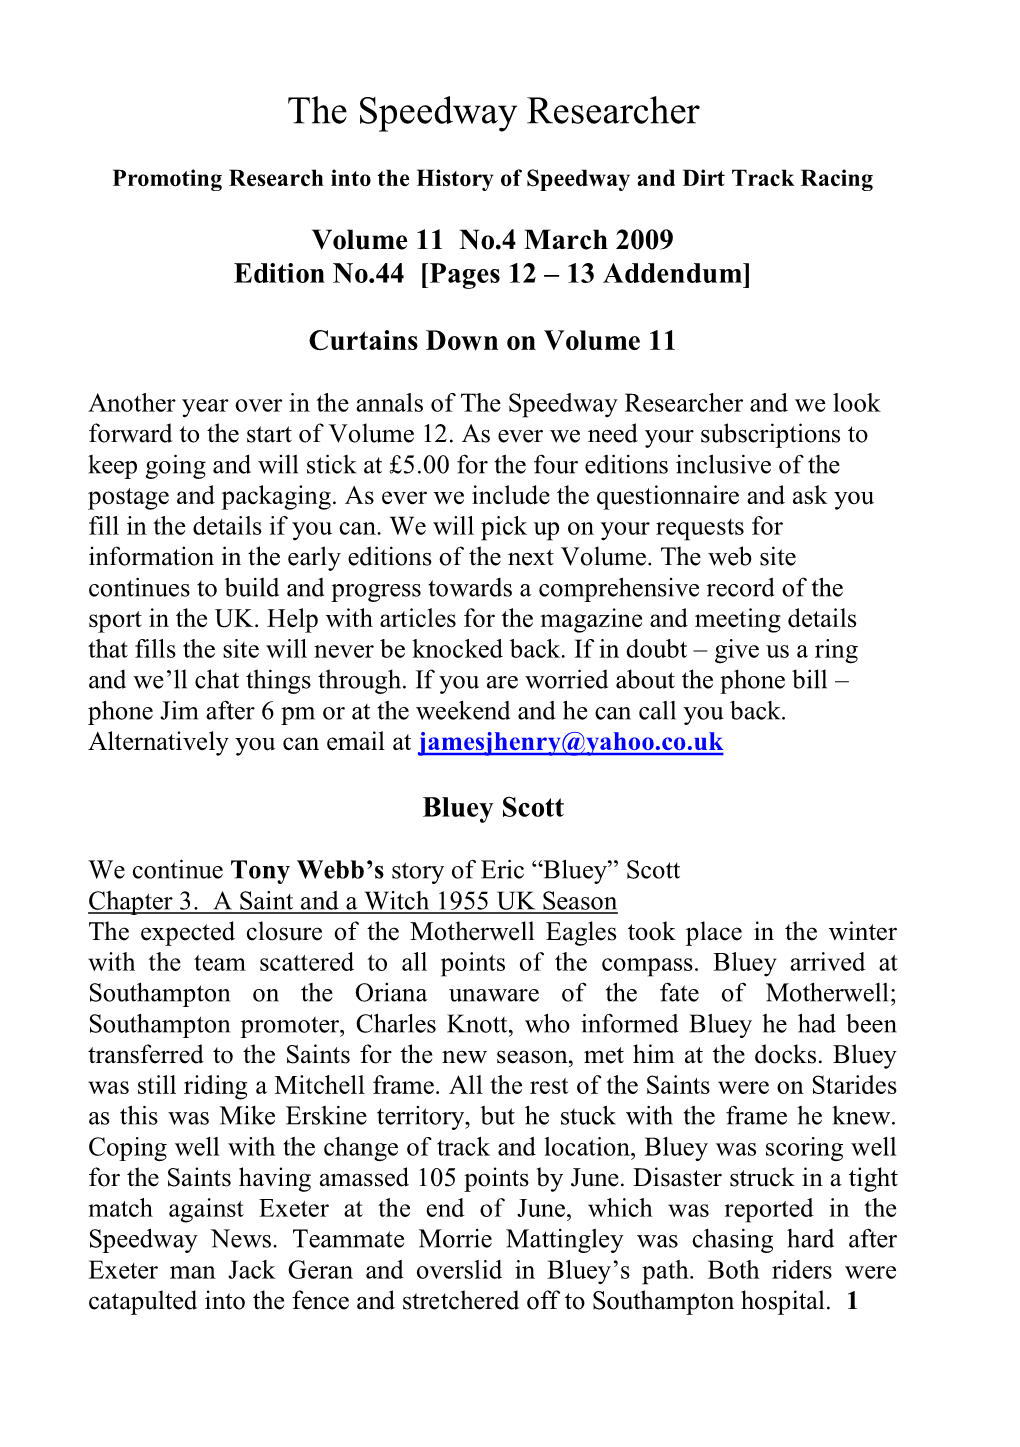 Volume 11 No.4 March 2009 Edition No.44 [Pages 12 – 13 Addendum]